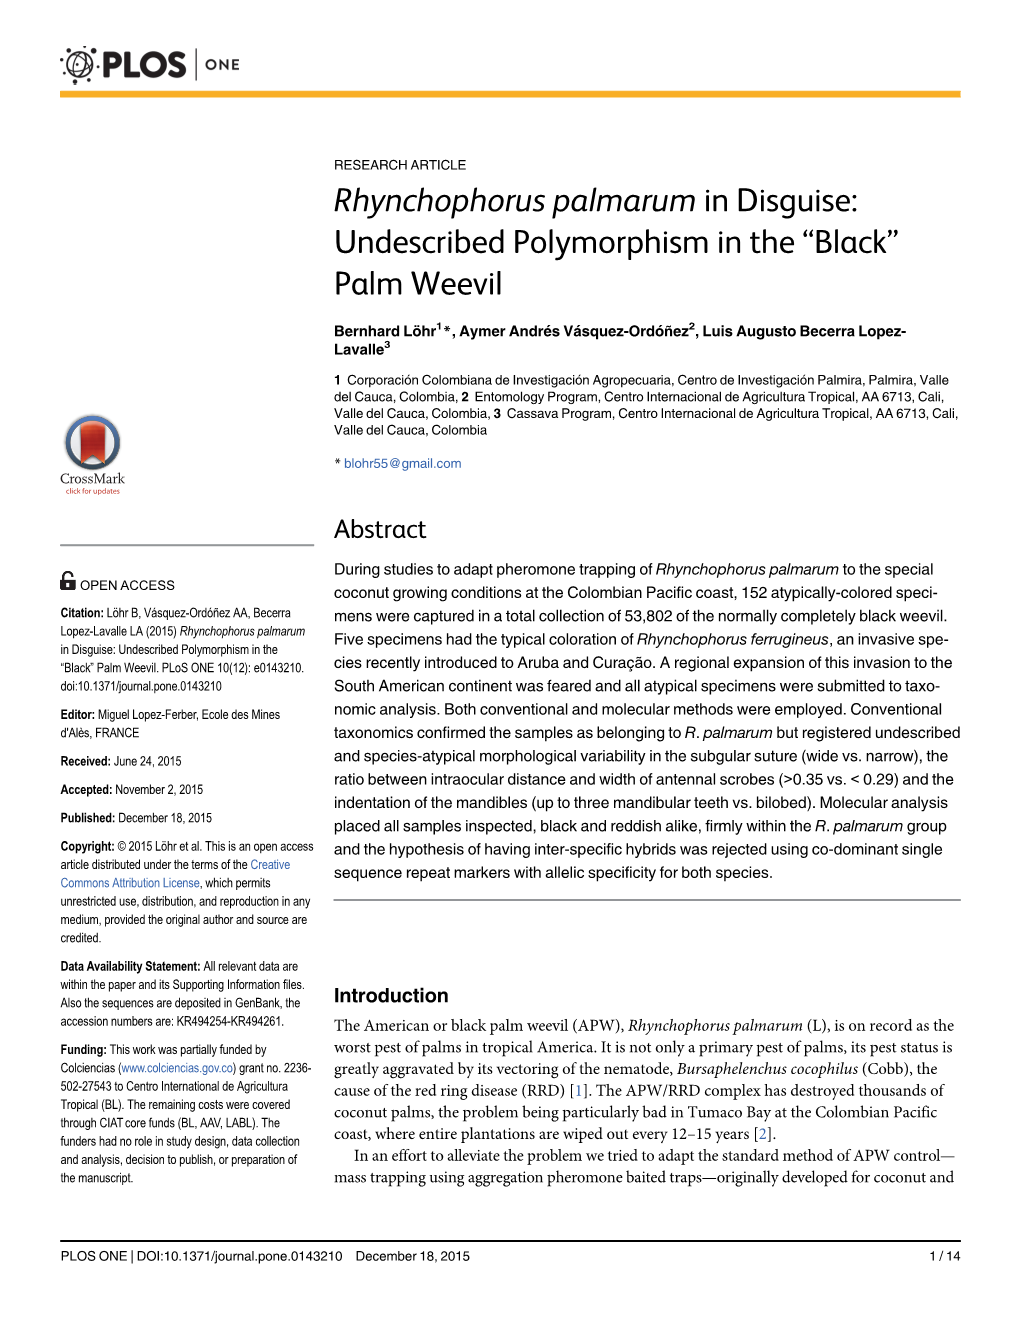 Rhynchophorus Palmarum in Disguise: Undescribed Polymorphism in the “Black” Palm Weevil